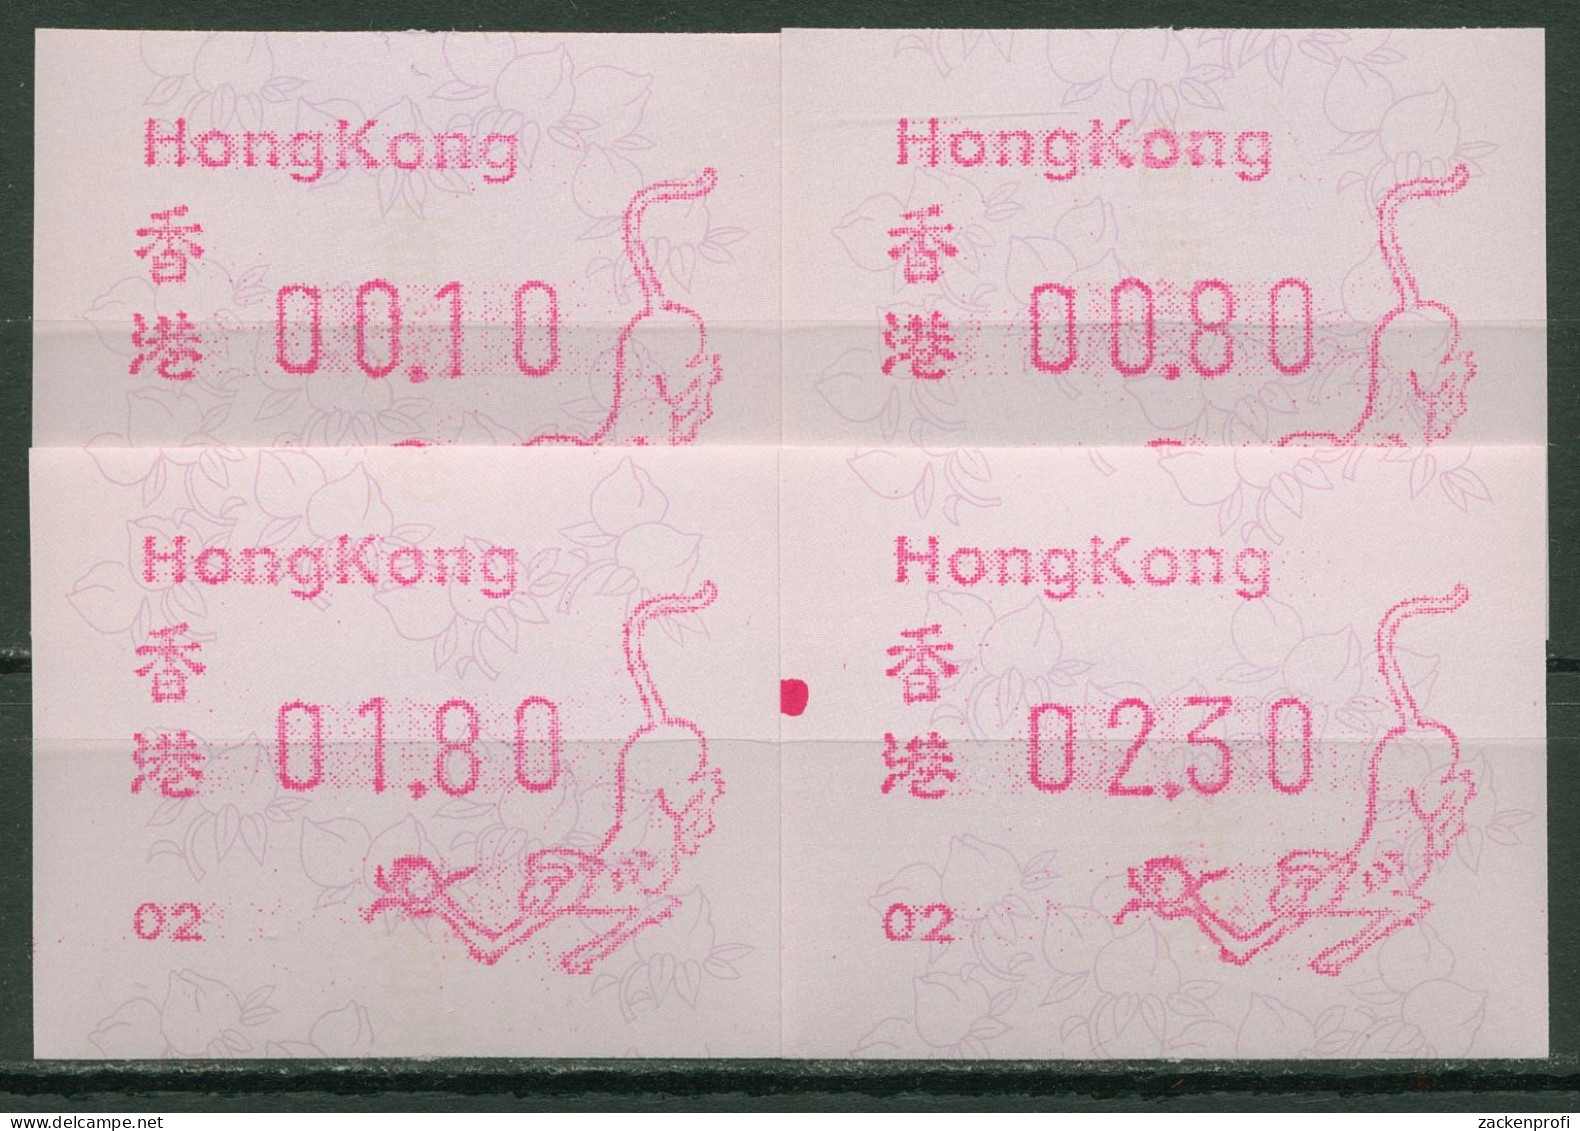 Hongkong 1992 Jahr Des Affen Automatenmarke 7.1 S1.2 Automat 02 Postfrisch - Distributeurs